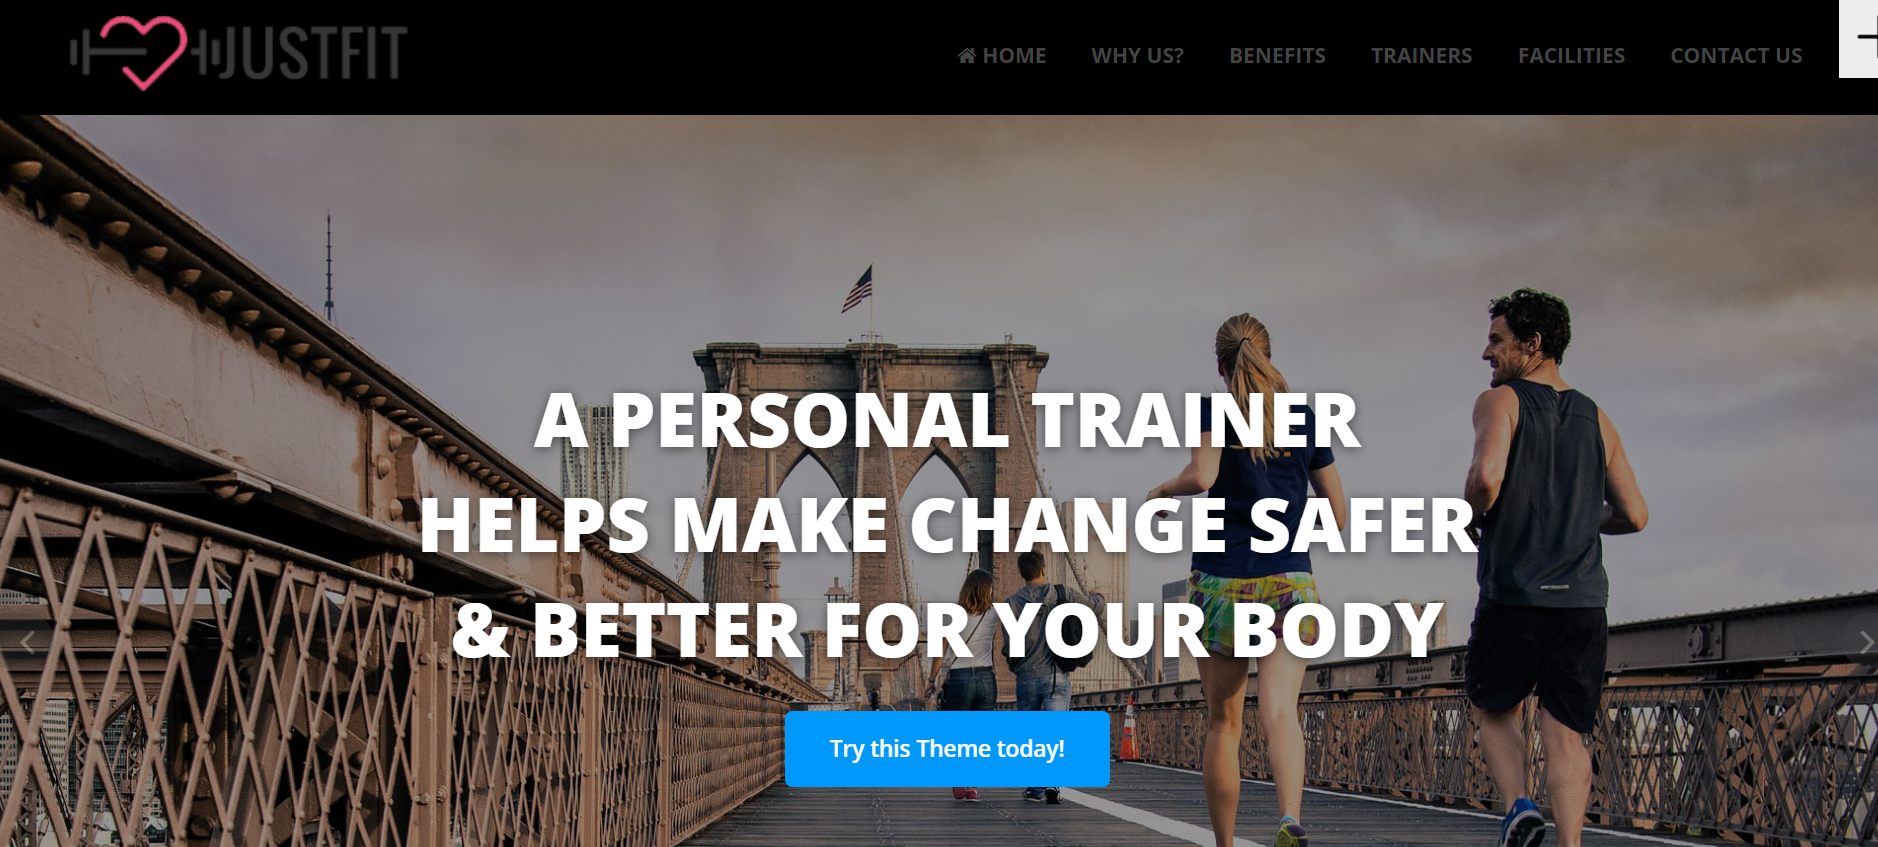 Premium WordPress Fitness Themes